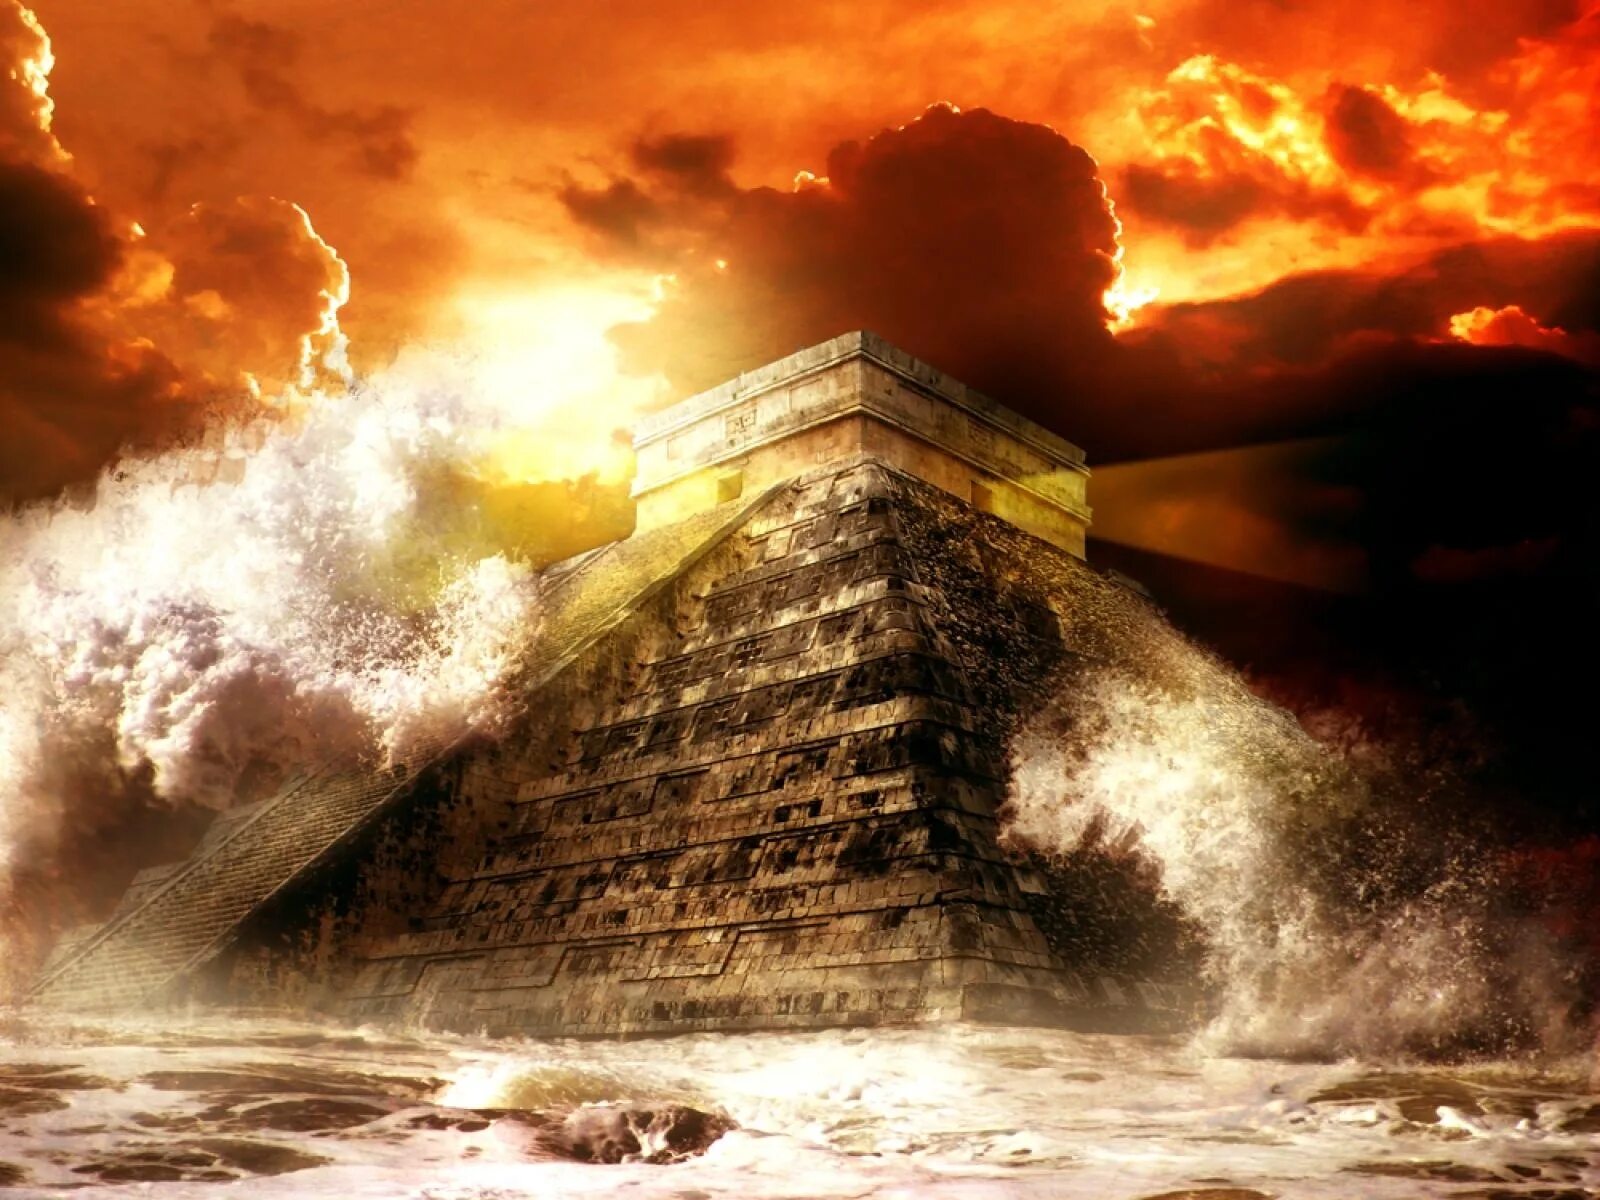 Конец света пройдет. Конец света 2012 Майя. Конец света 2012 21 декабря. Пирамида апокалипсиса. Катастрофа в древности.